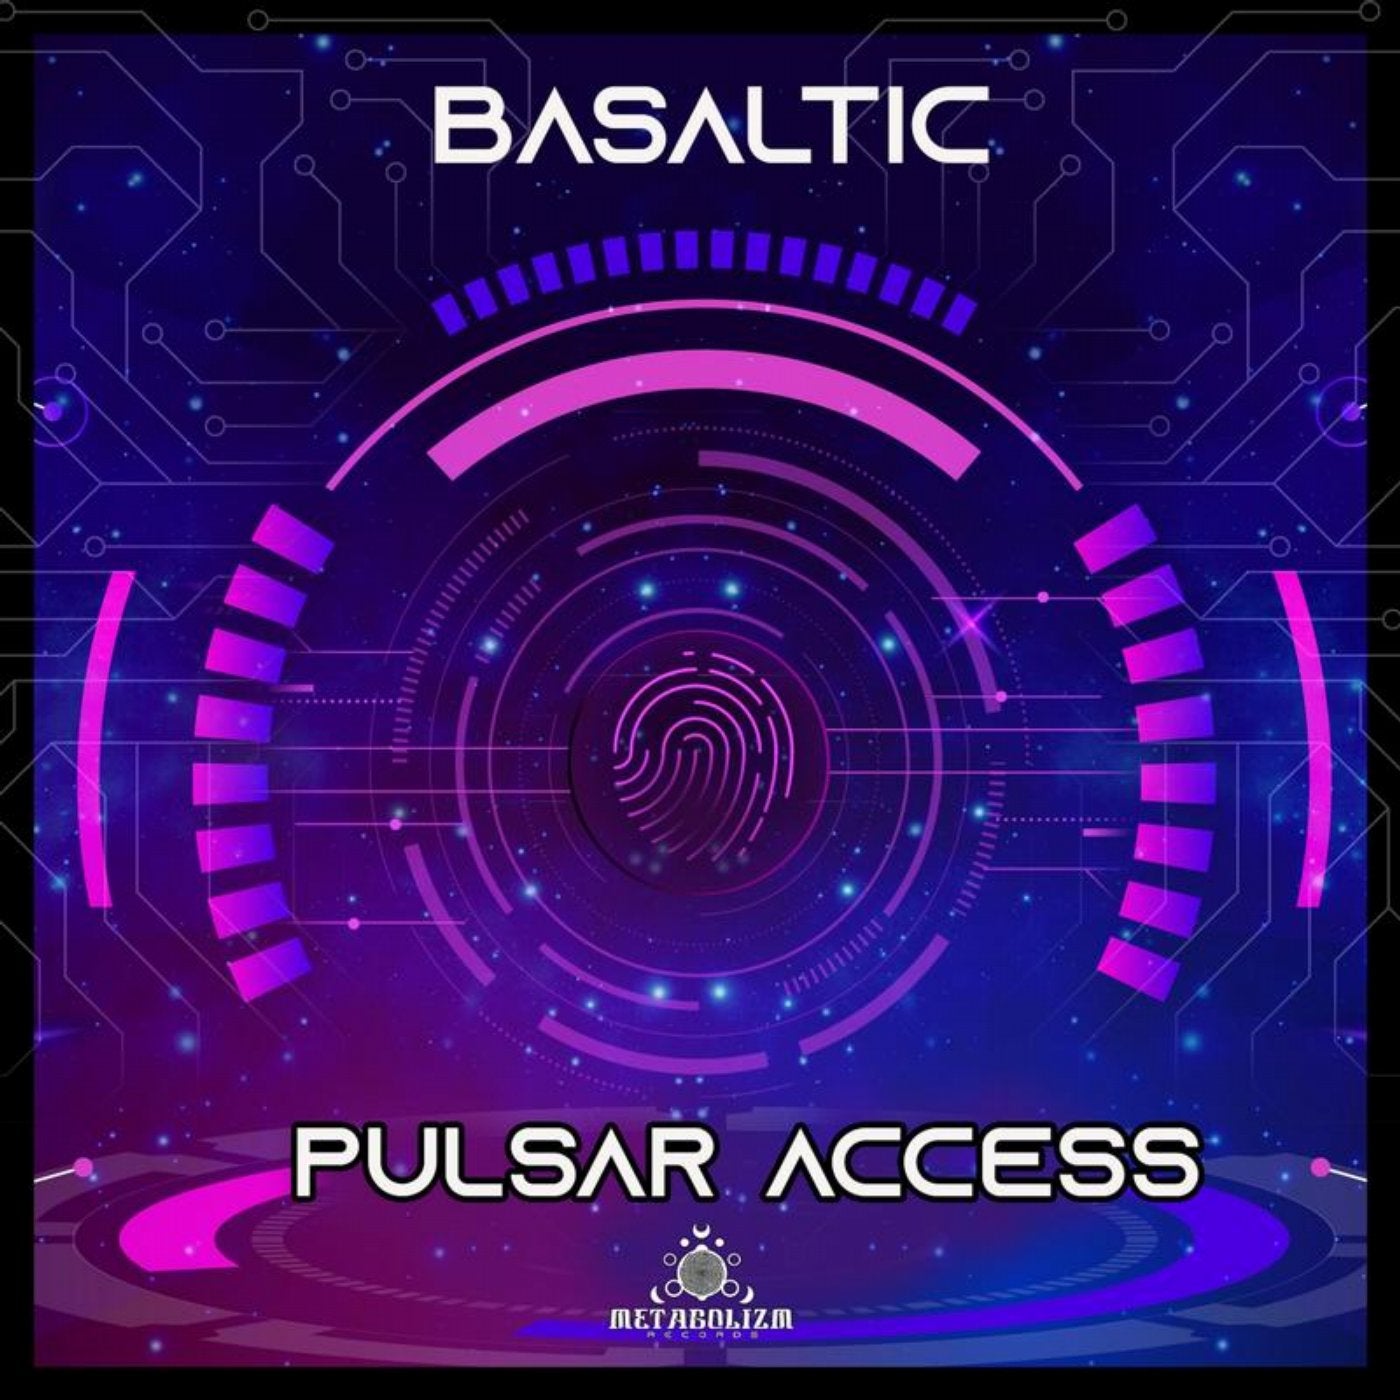 Pulsar Access